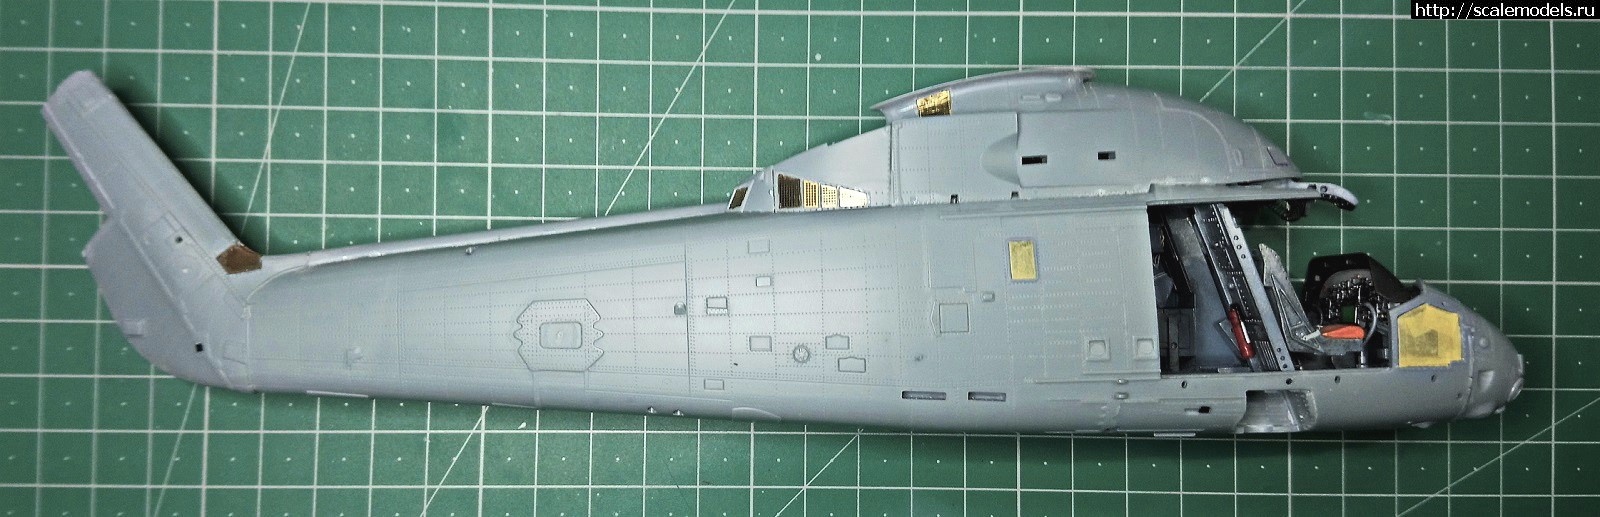 1641804886_42.JPG : SH-2F Seasprite 1/48 Kitty Hawk (ГОТОВО) Закрыть окно